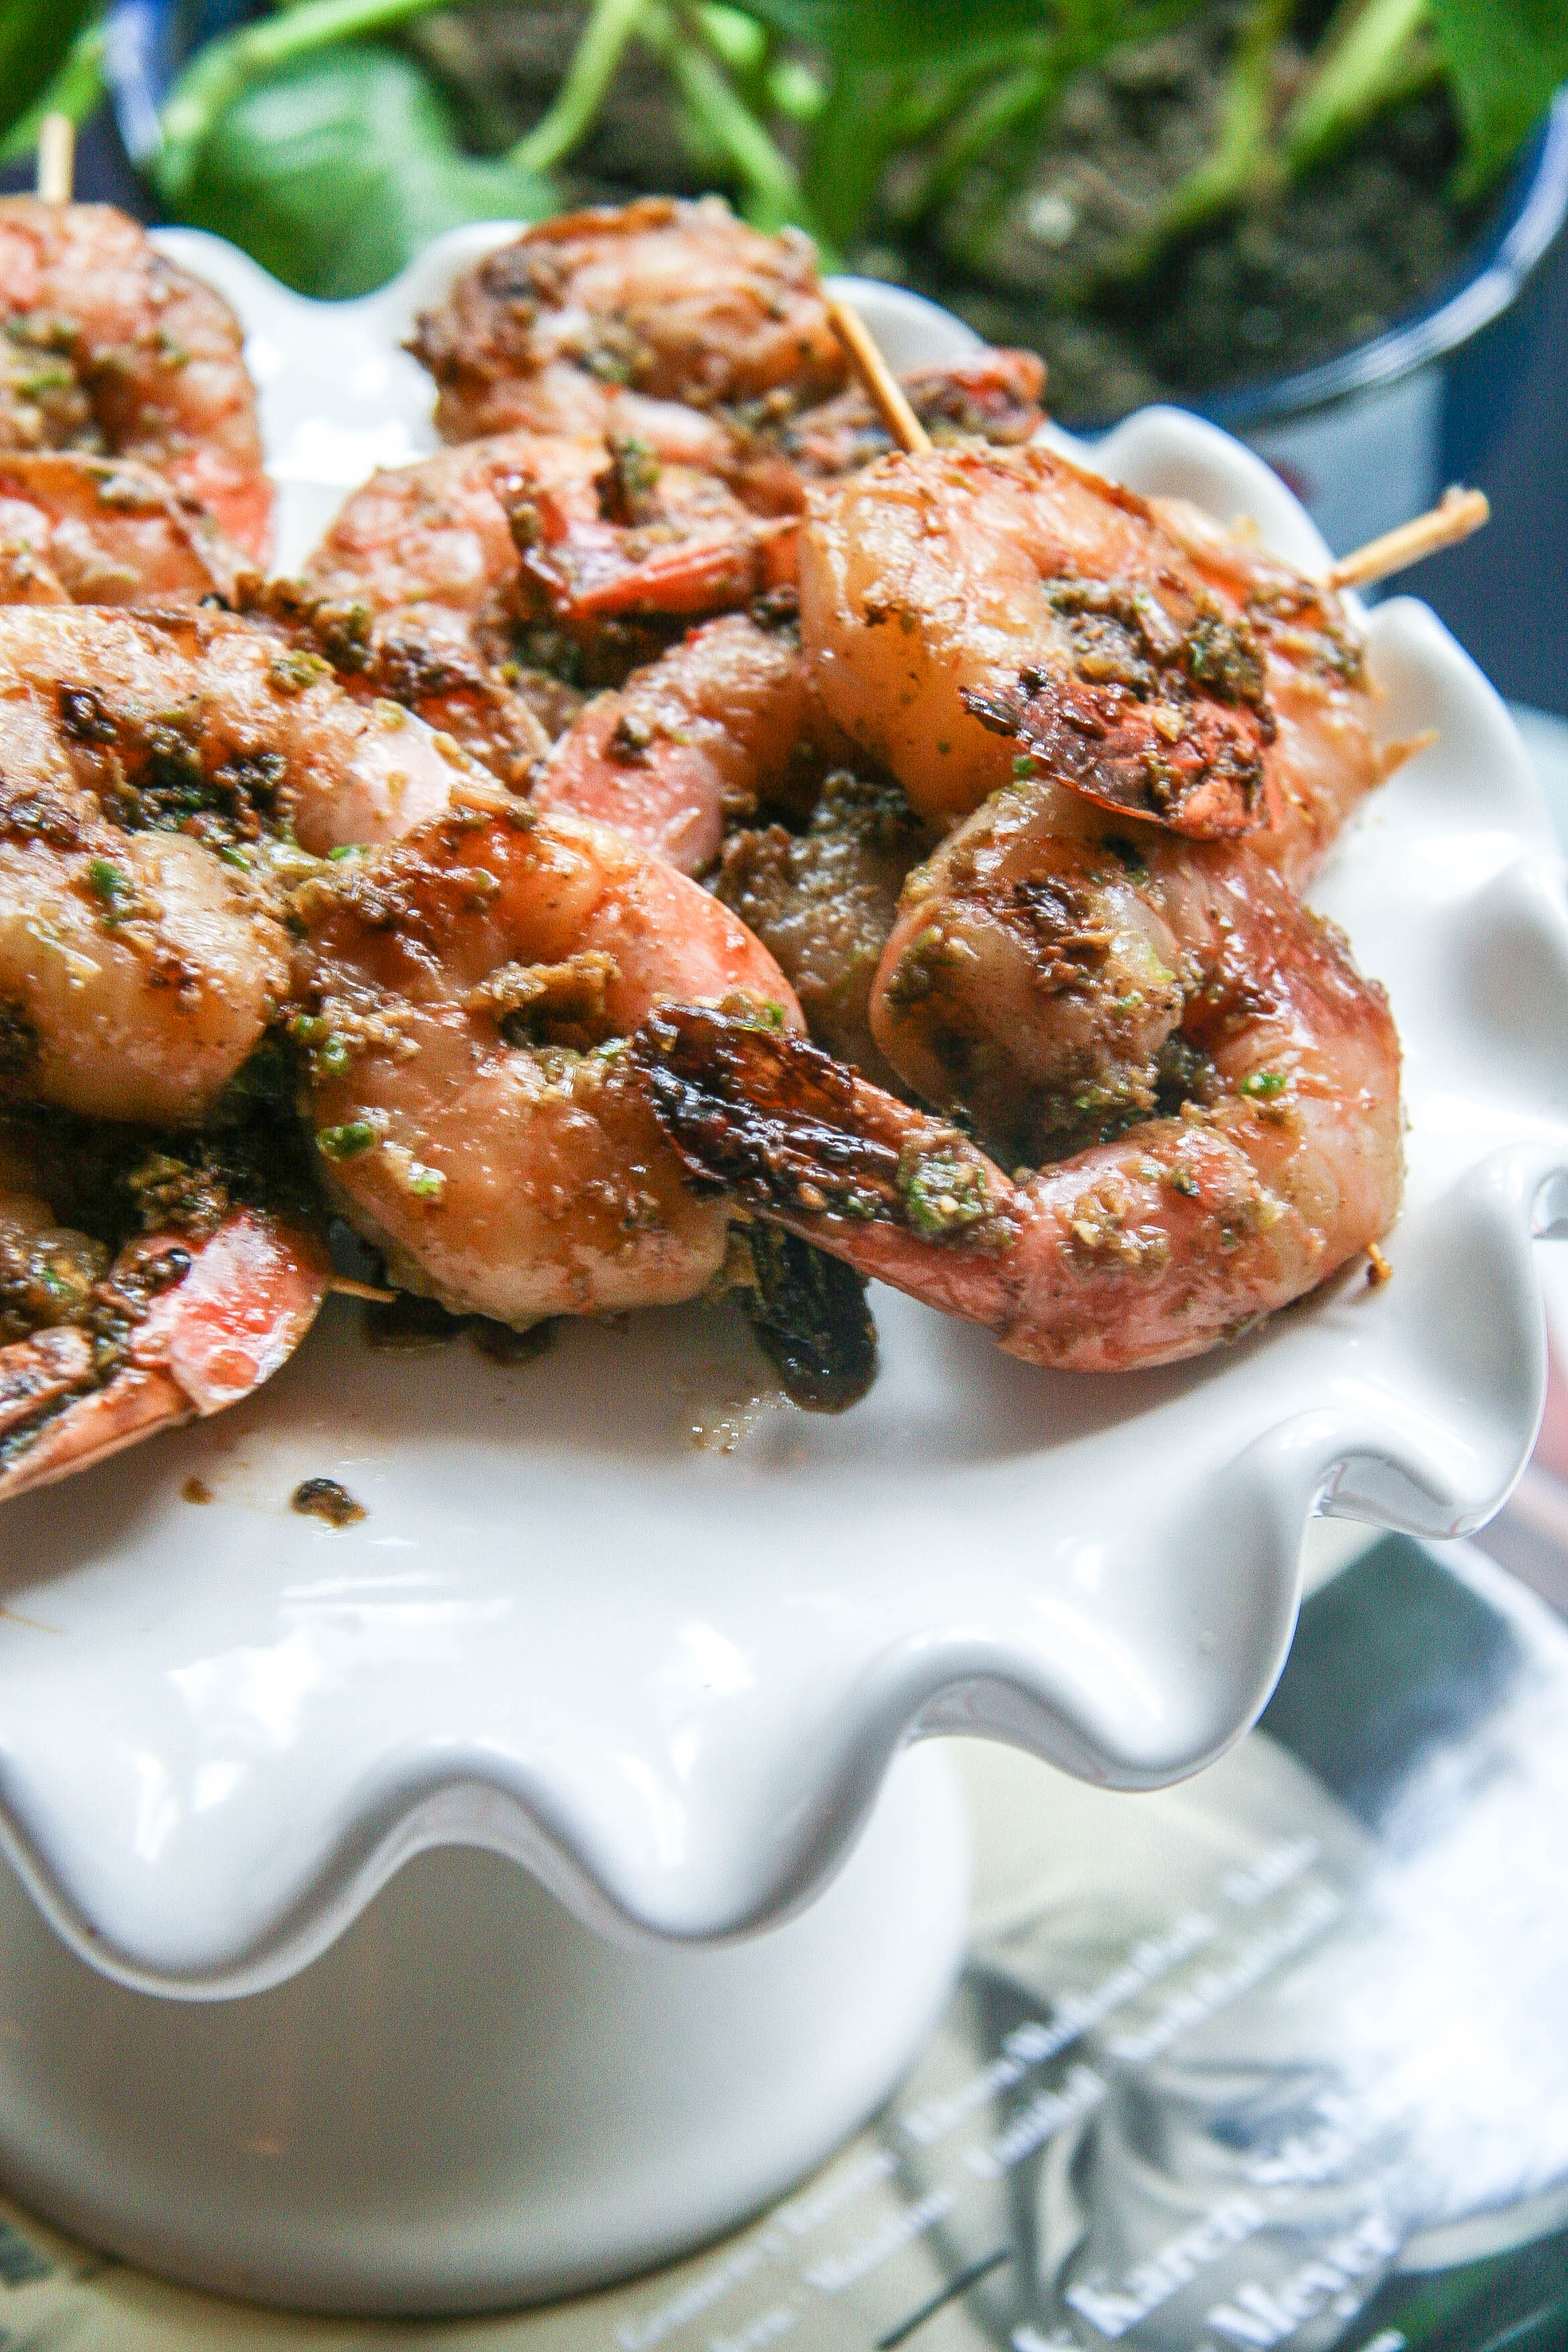 https://www.butterlovescompany.com/wp-content/uploads/2014/05/jerk-shrimp-recipe-6.jpg